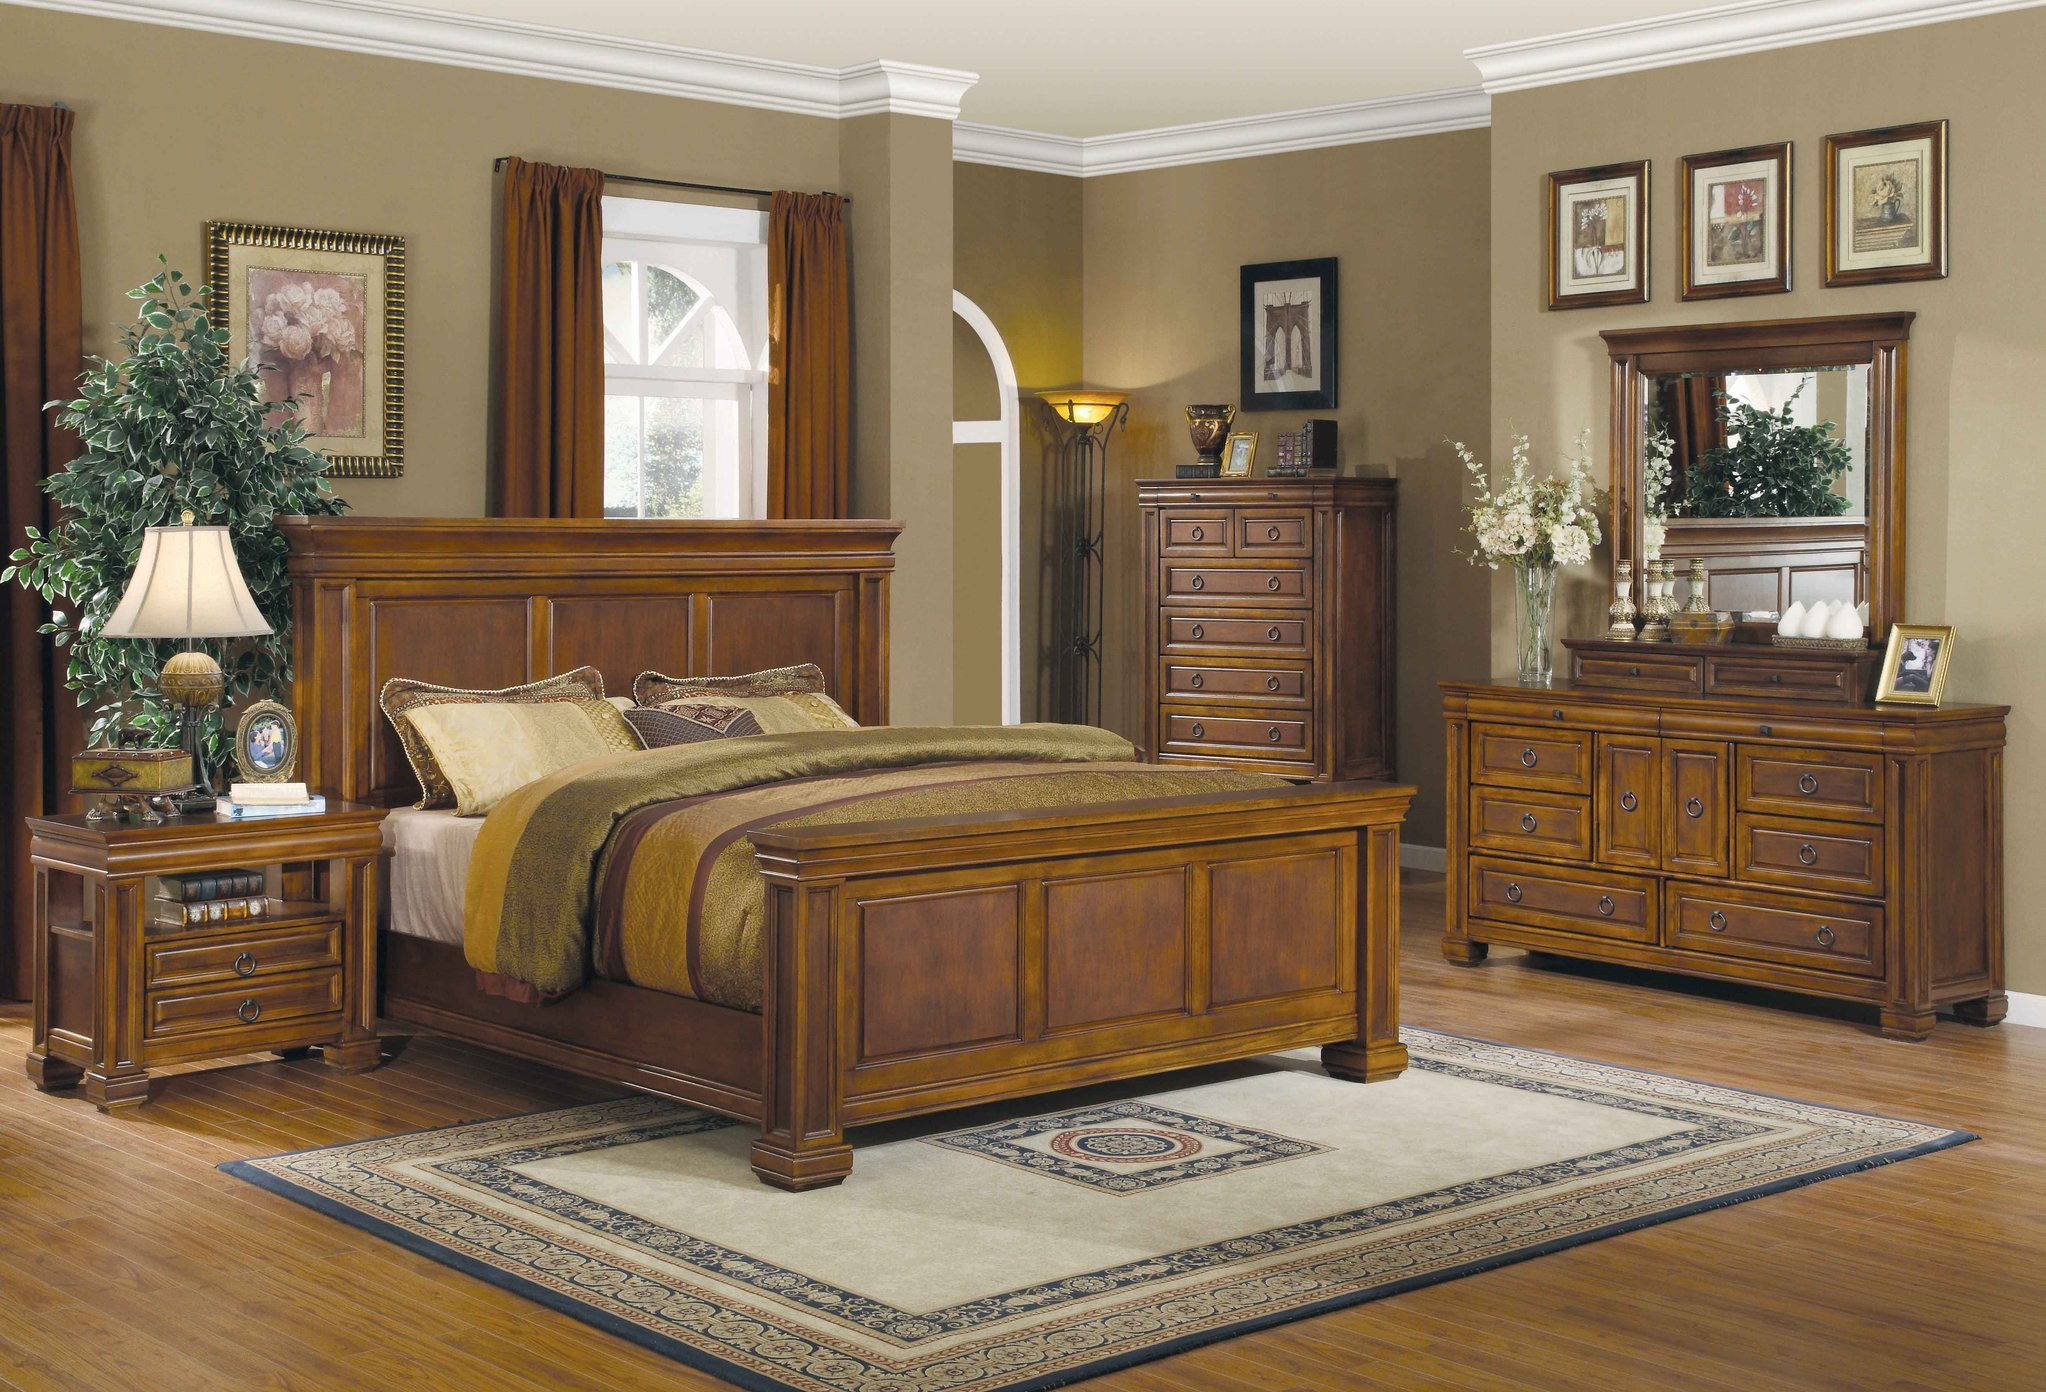 Rustic Bedroom Furniture Sets
 Antique Rustic Bedroom Furniture Wood King and Queen